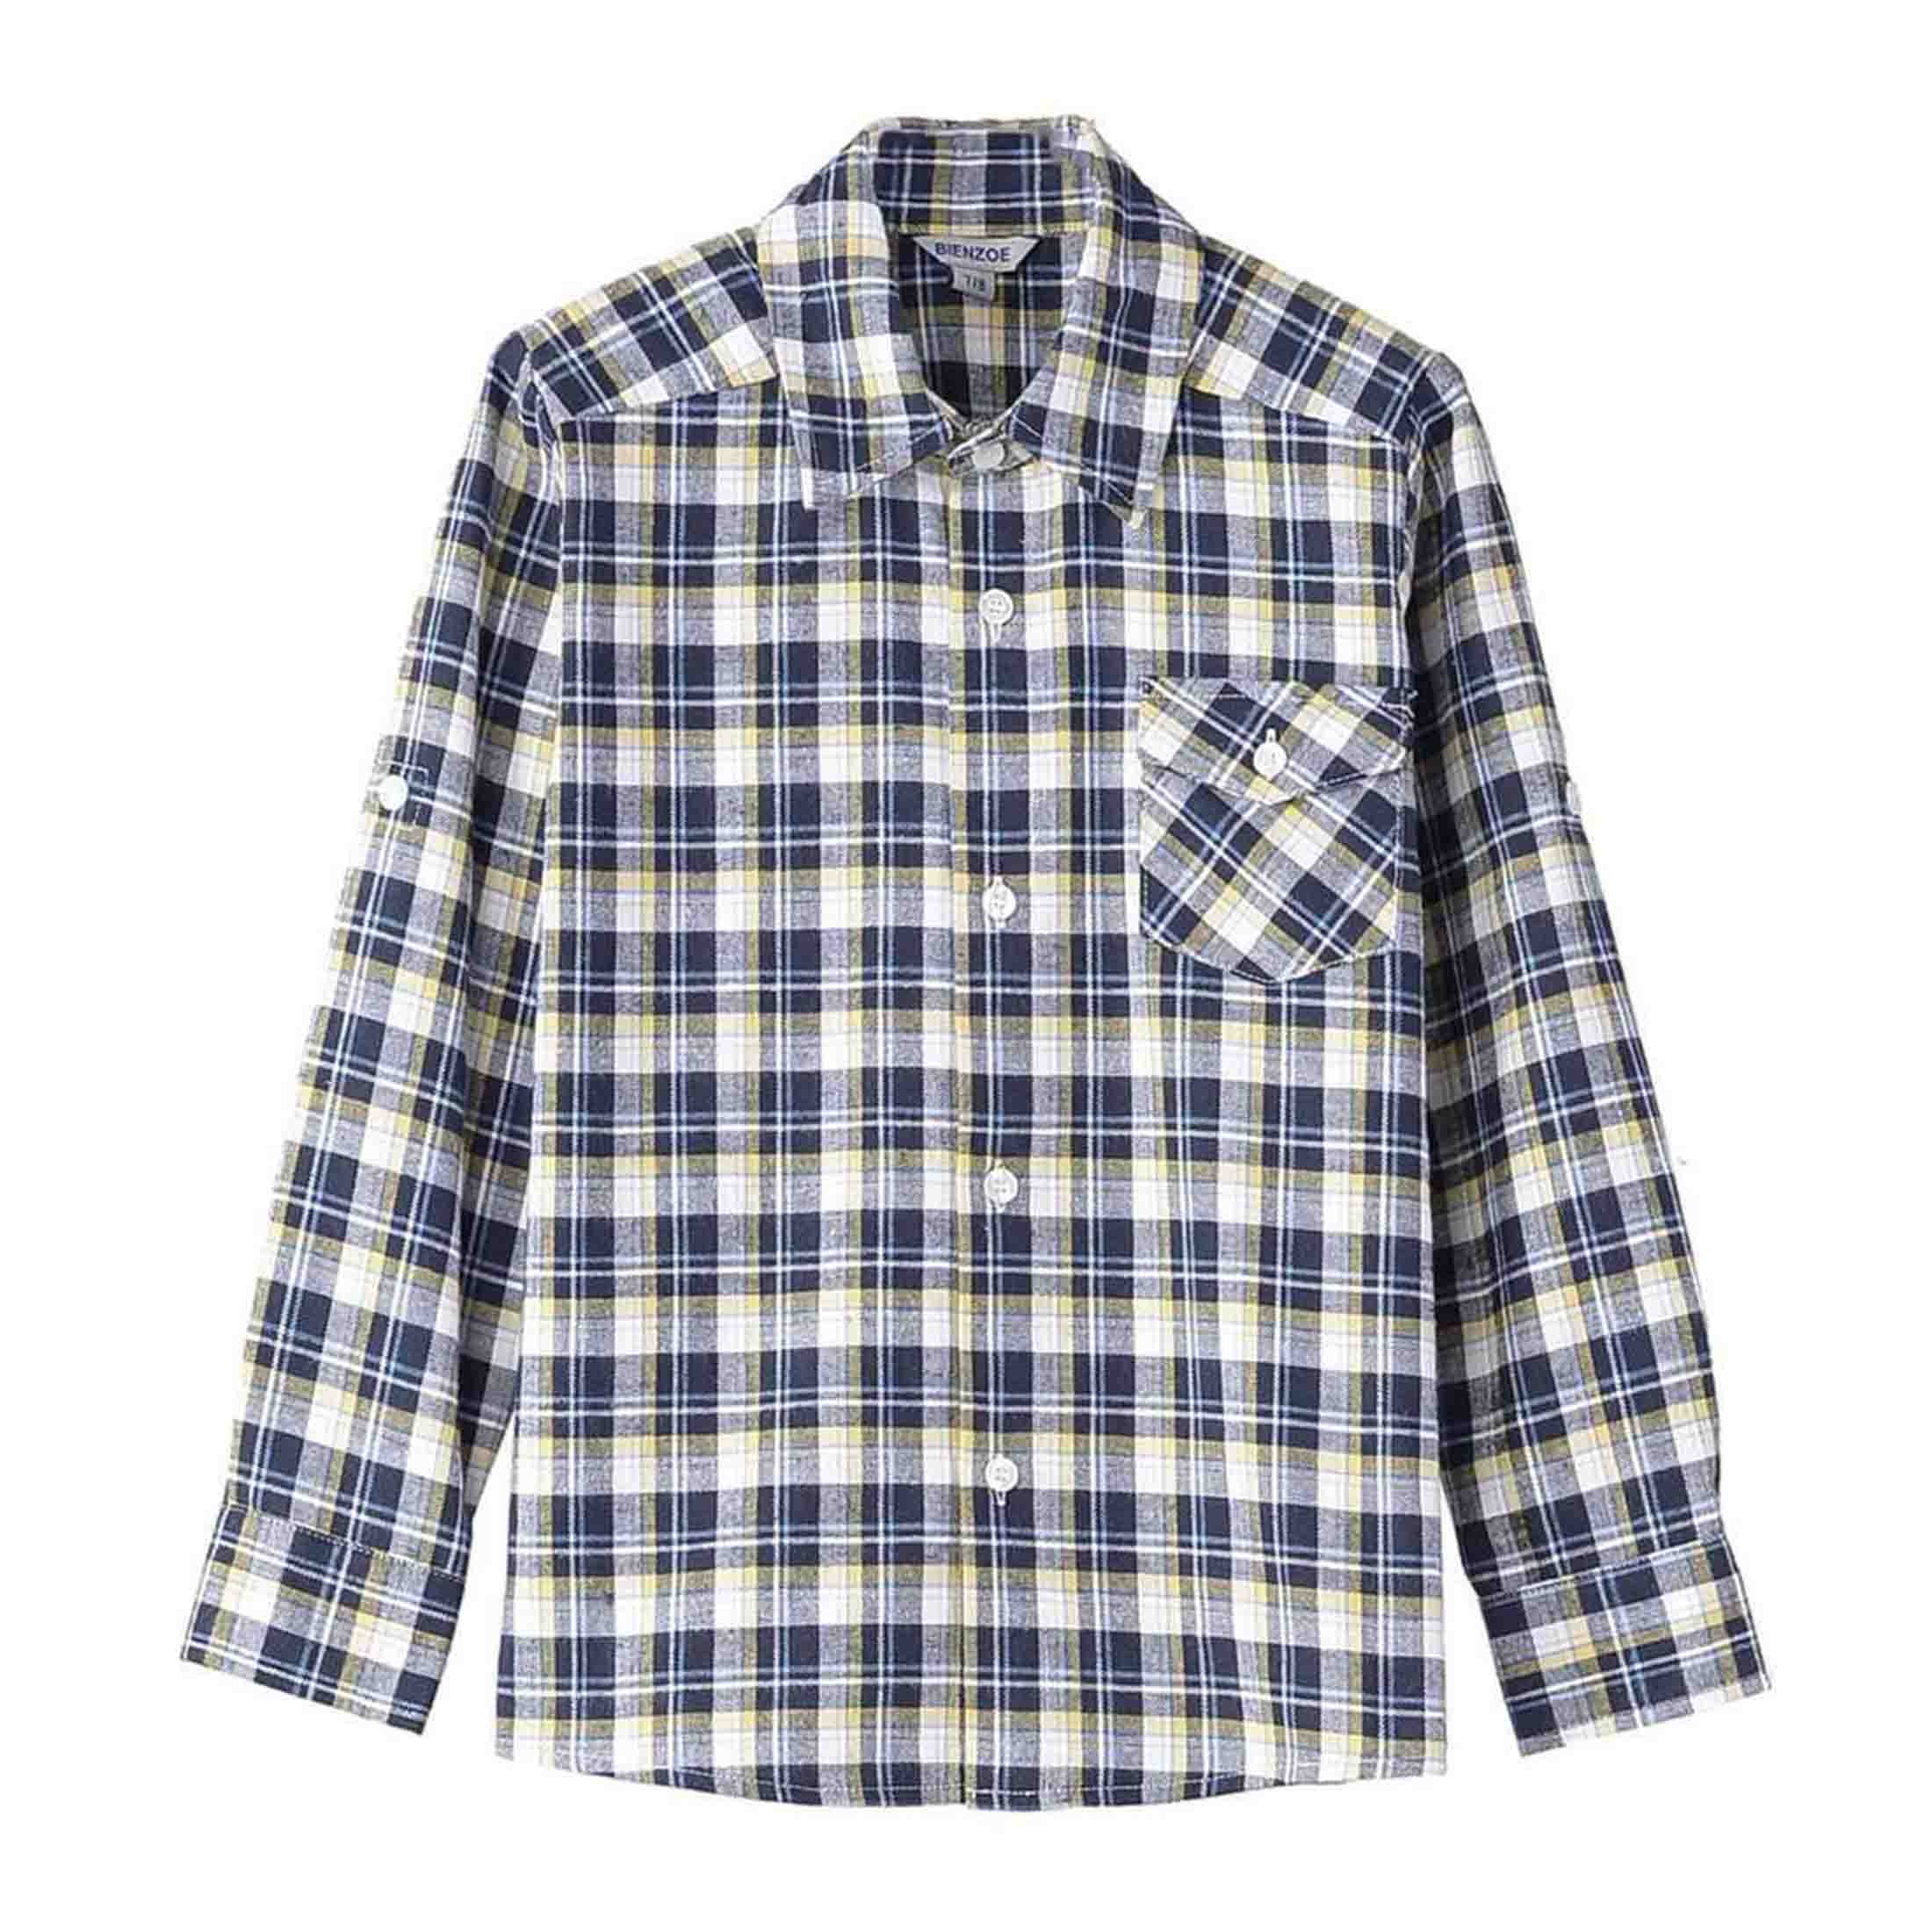 Bienzoe Boys Flannel Button Down Long Sleeve Plaid Shirt